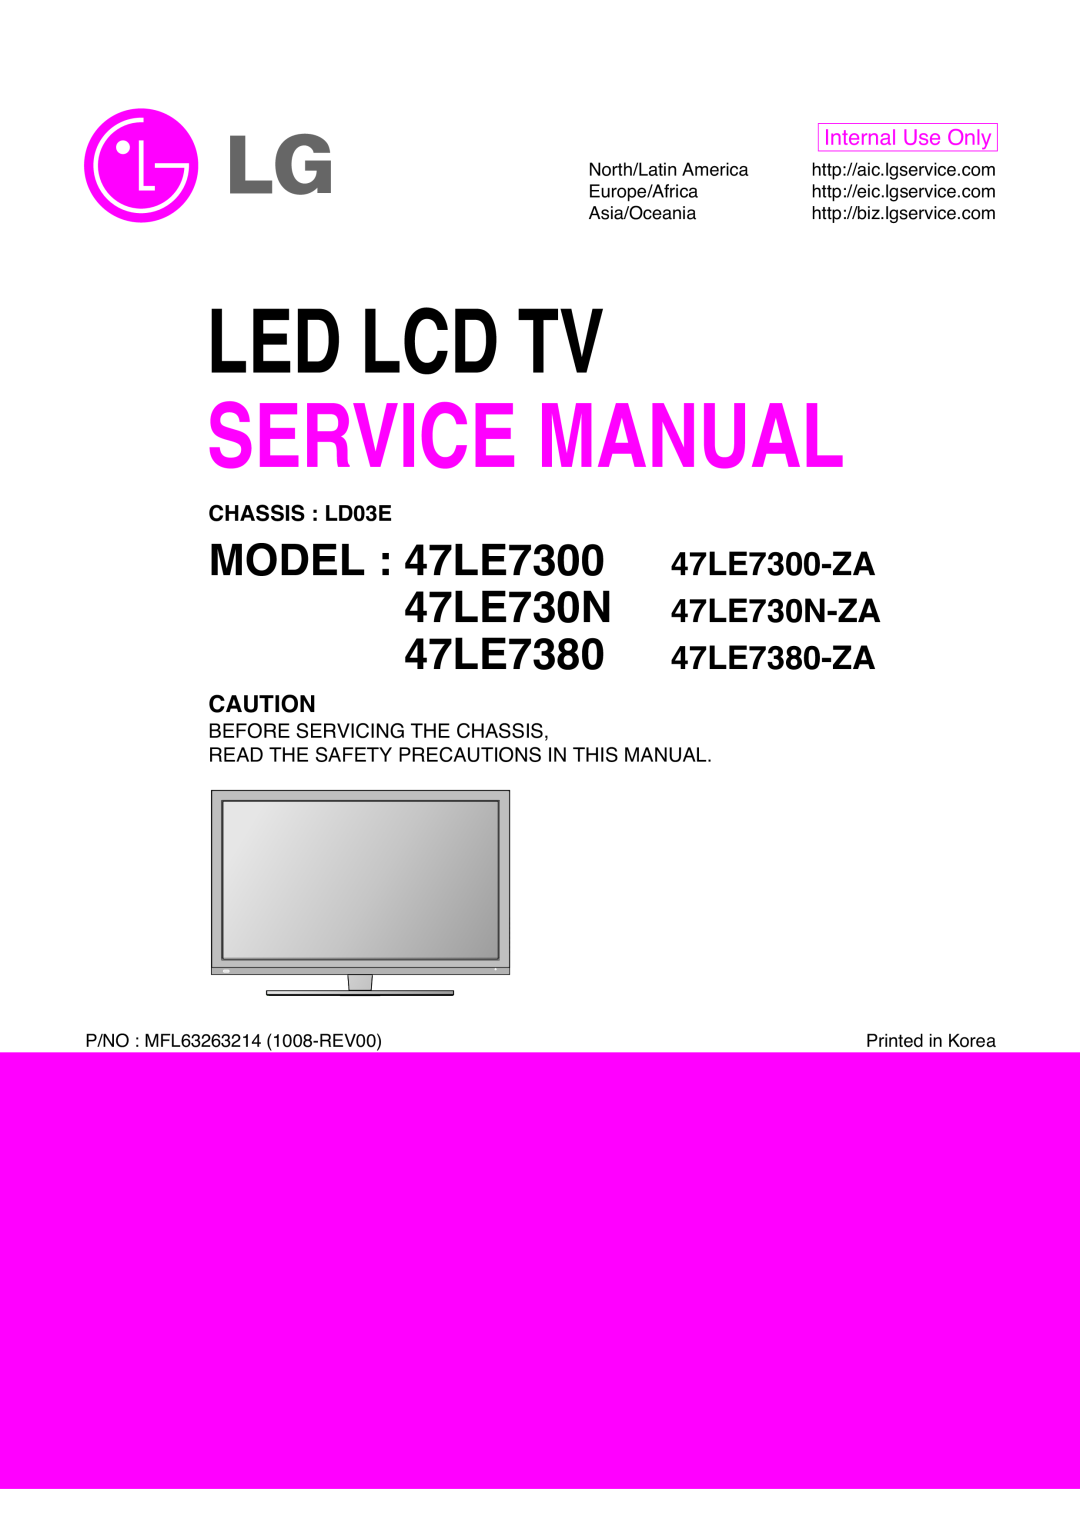 LG Electronics service manual CHASSIS LD03E, Led Lcd Tv Service Manual, MODEL 47LE7300, MODEL 47LE730N MODEL 47LE7380 